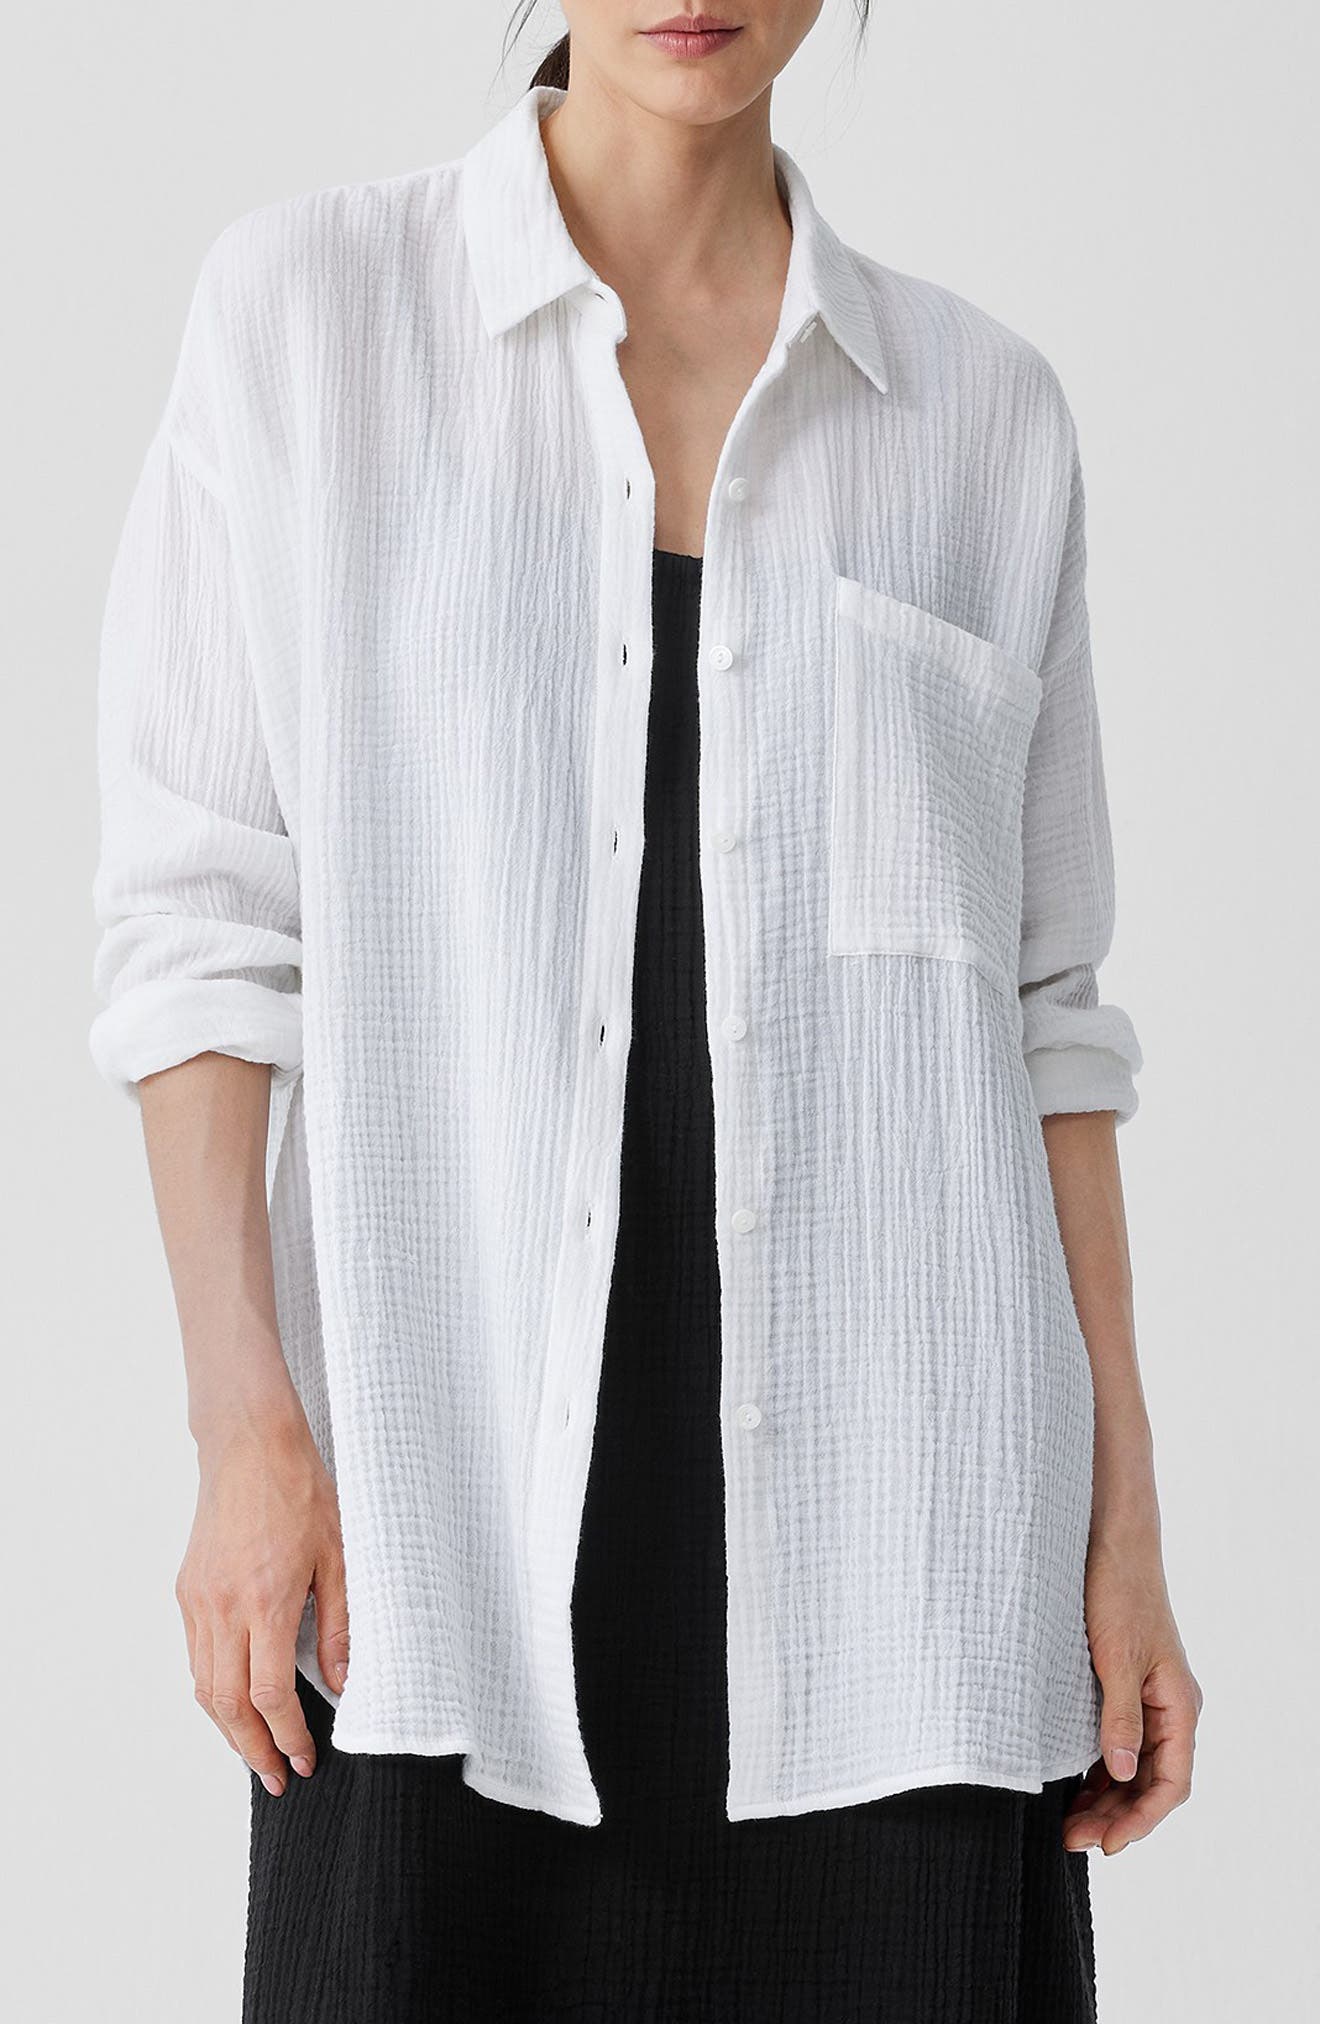 Eileen Fisher - Women's Organic Cotton Lofty Gauze Classic Collar Long Shirt - White - Size: Medium Regular